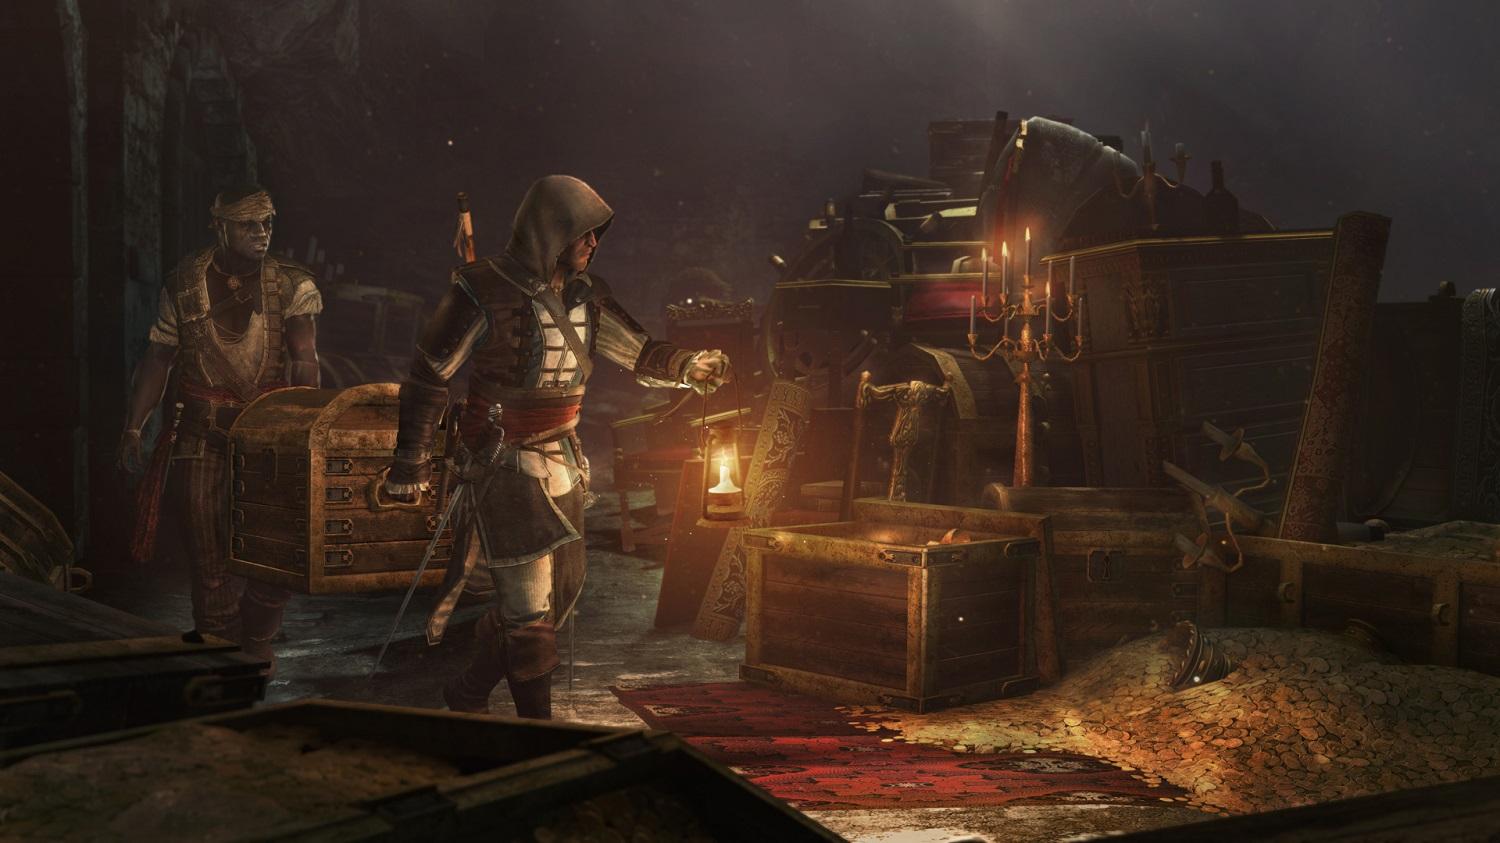 Assassin's Creed IV: Black Flag - maximum wanted level 